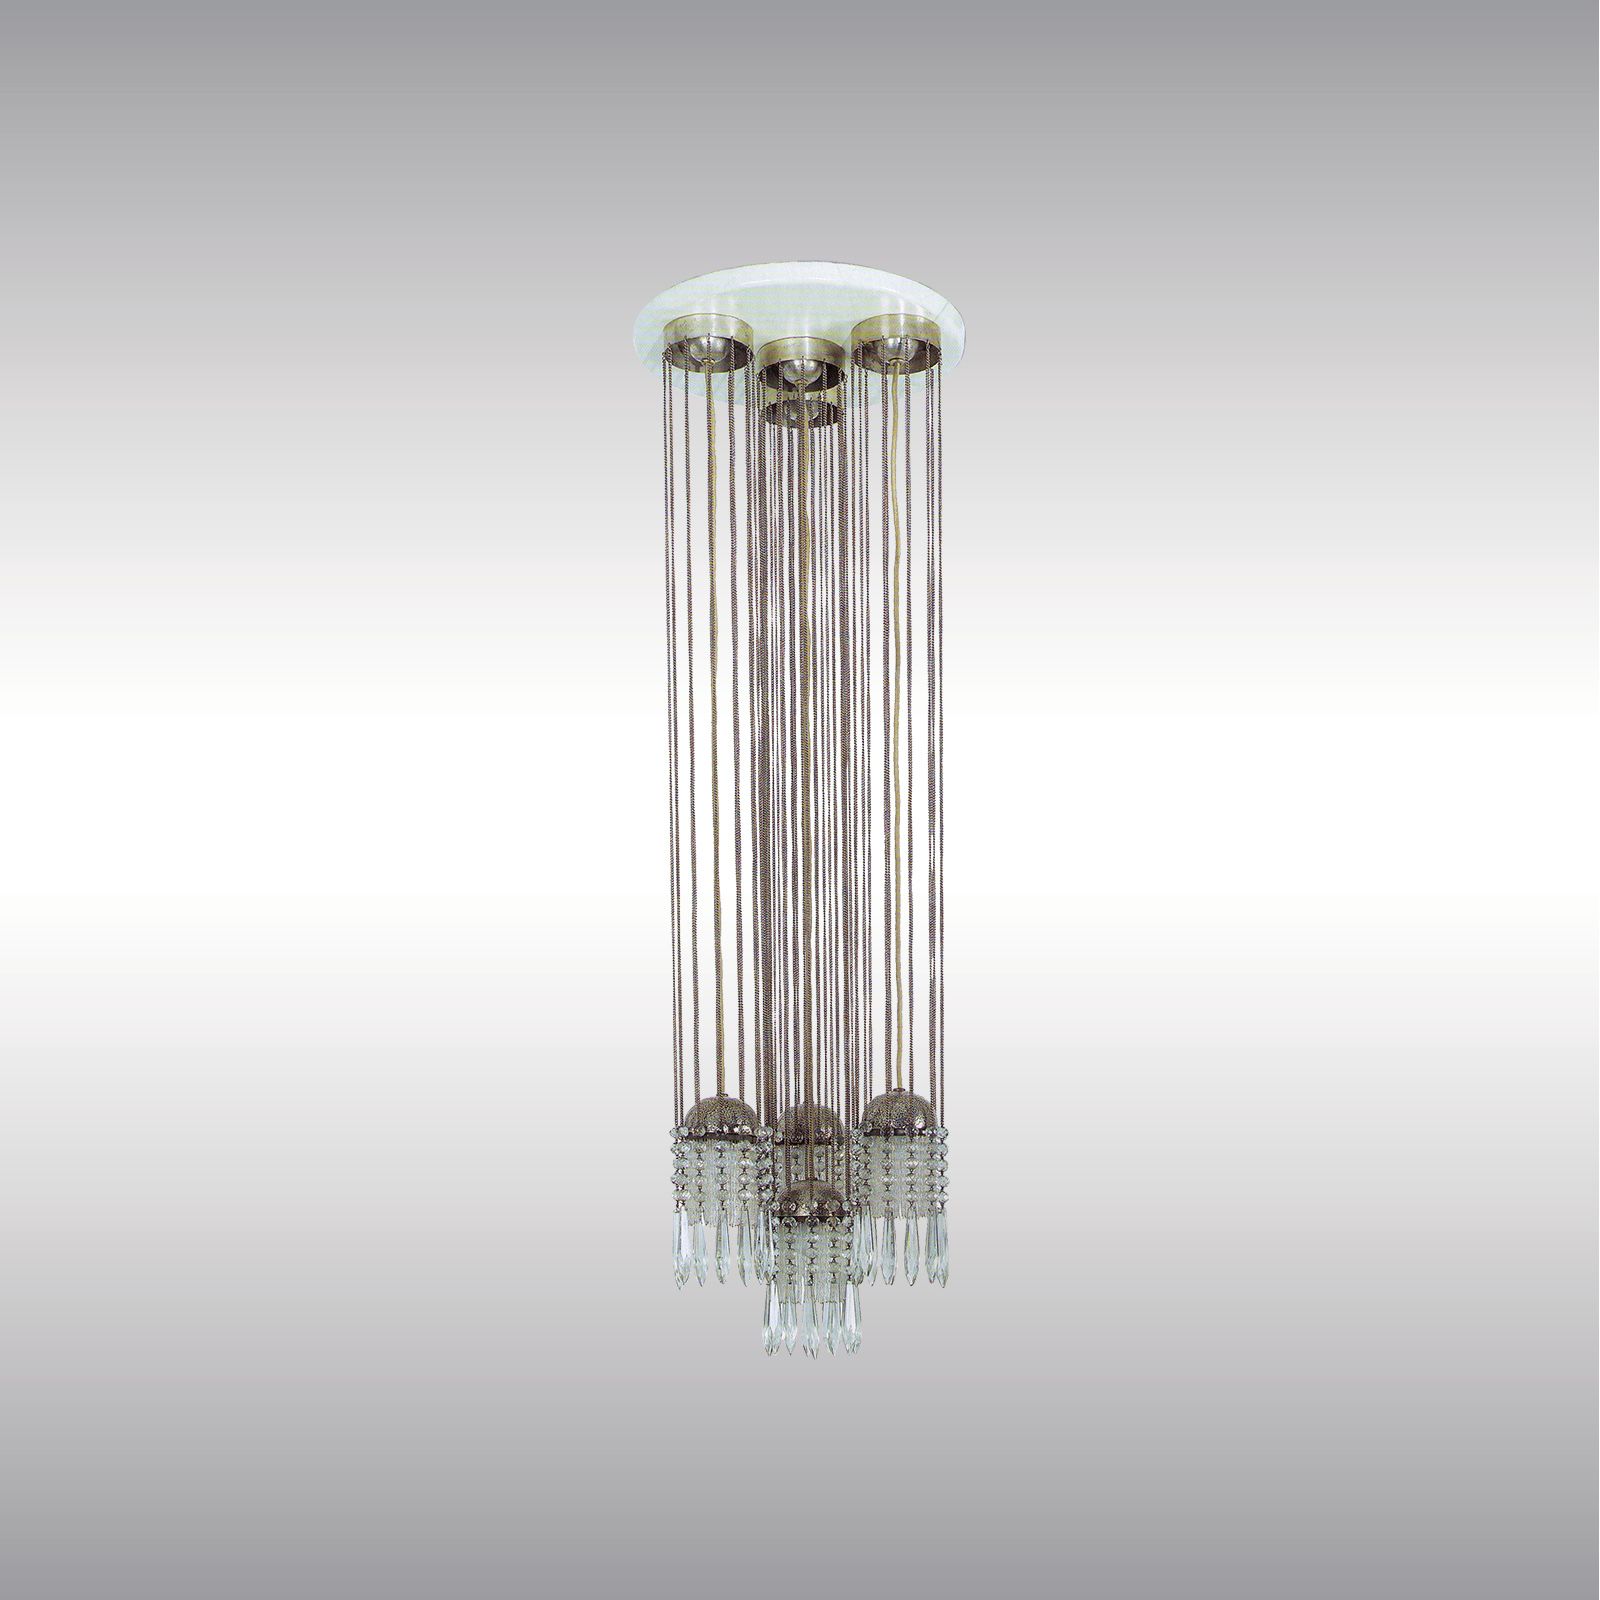 WOKA LAMPS VIENNA - OrderNr.: 21625|Neustiftgasse - Design: Josef Hoffmann